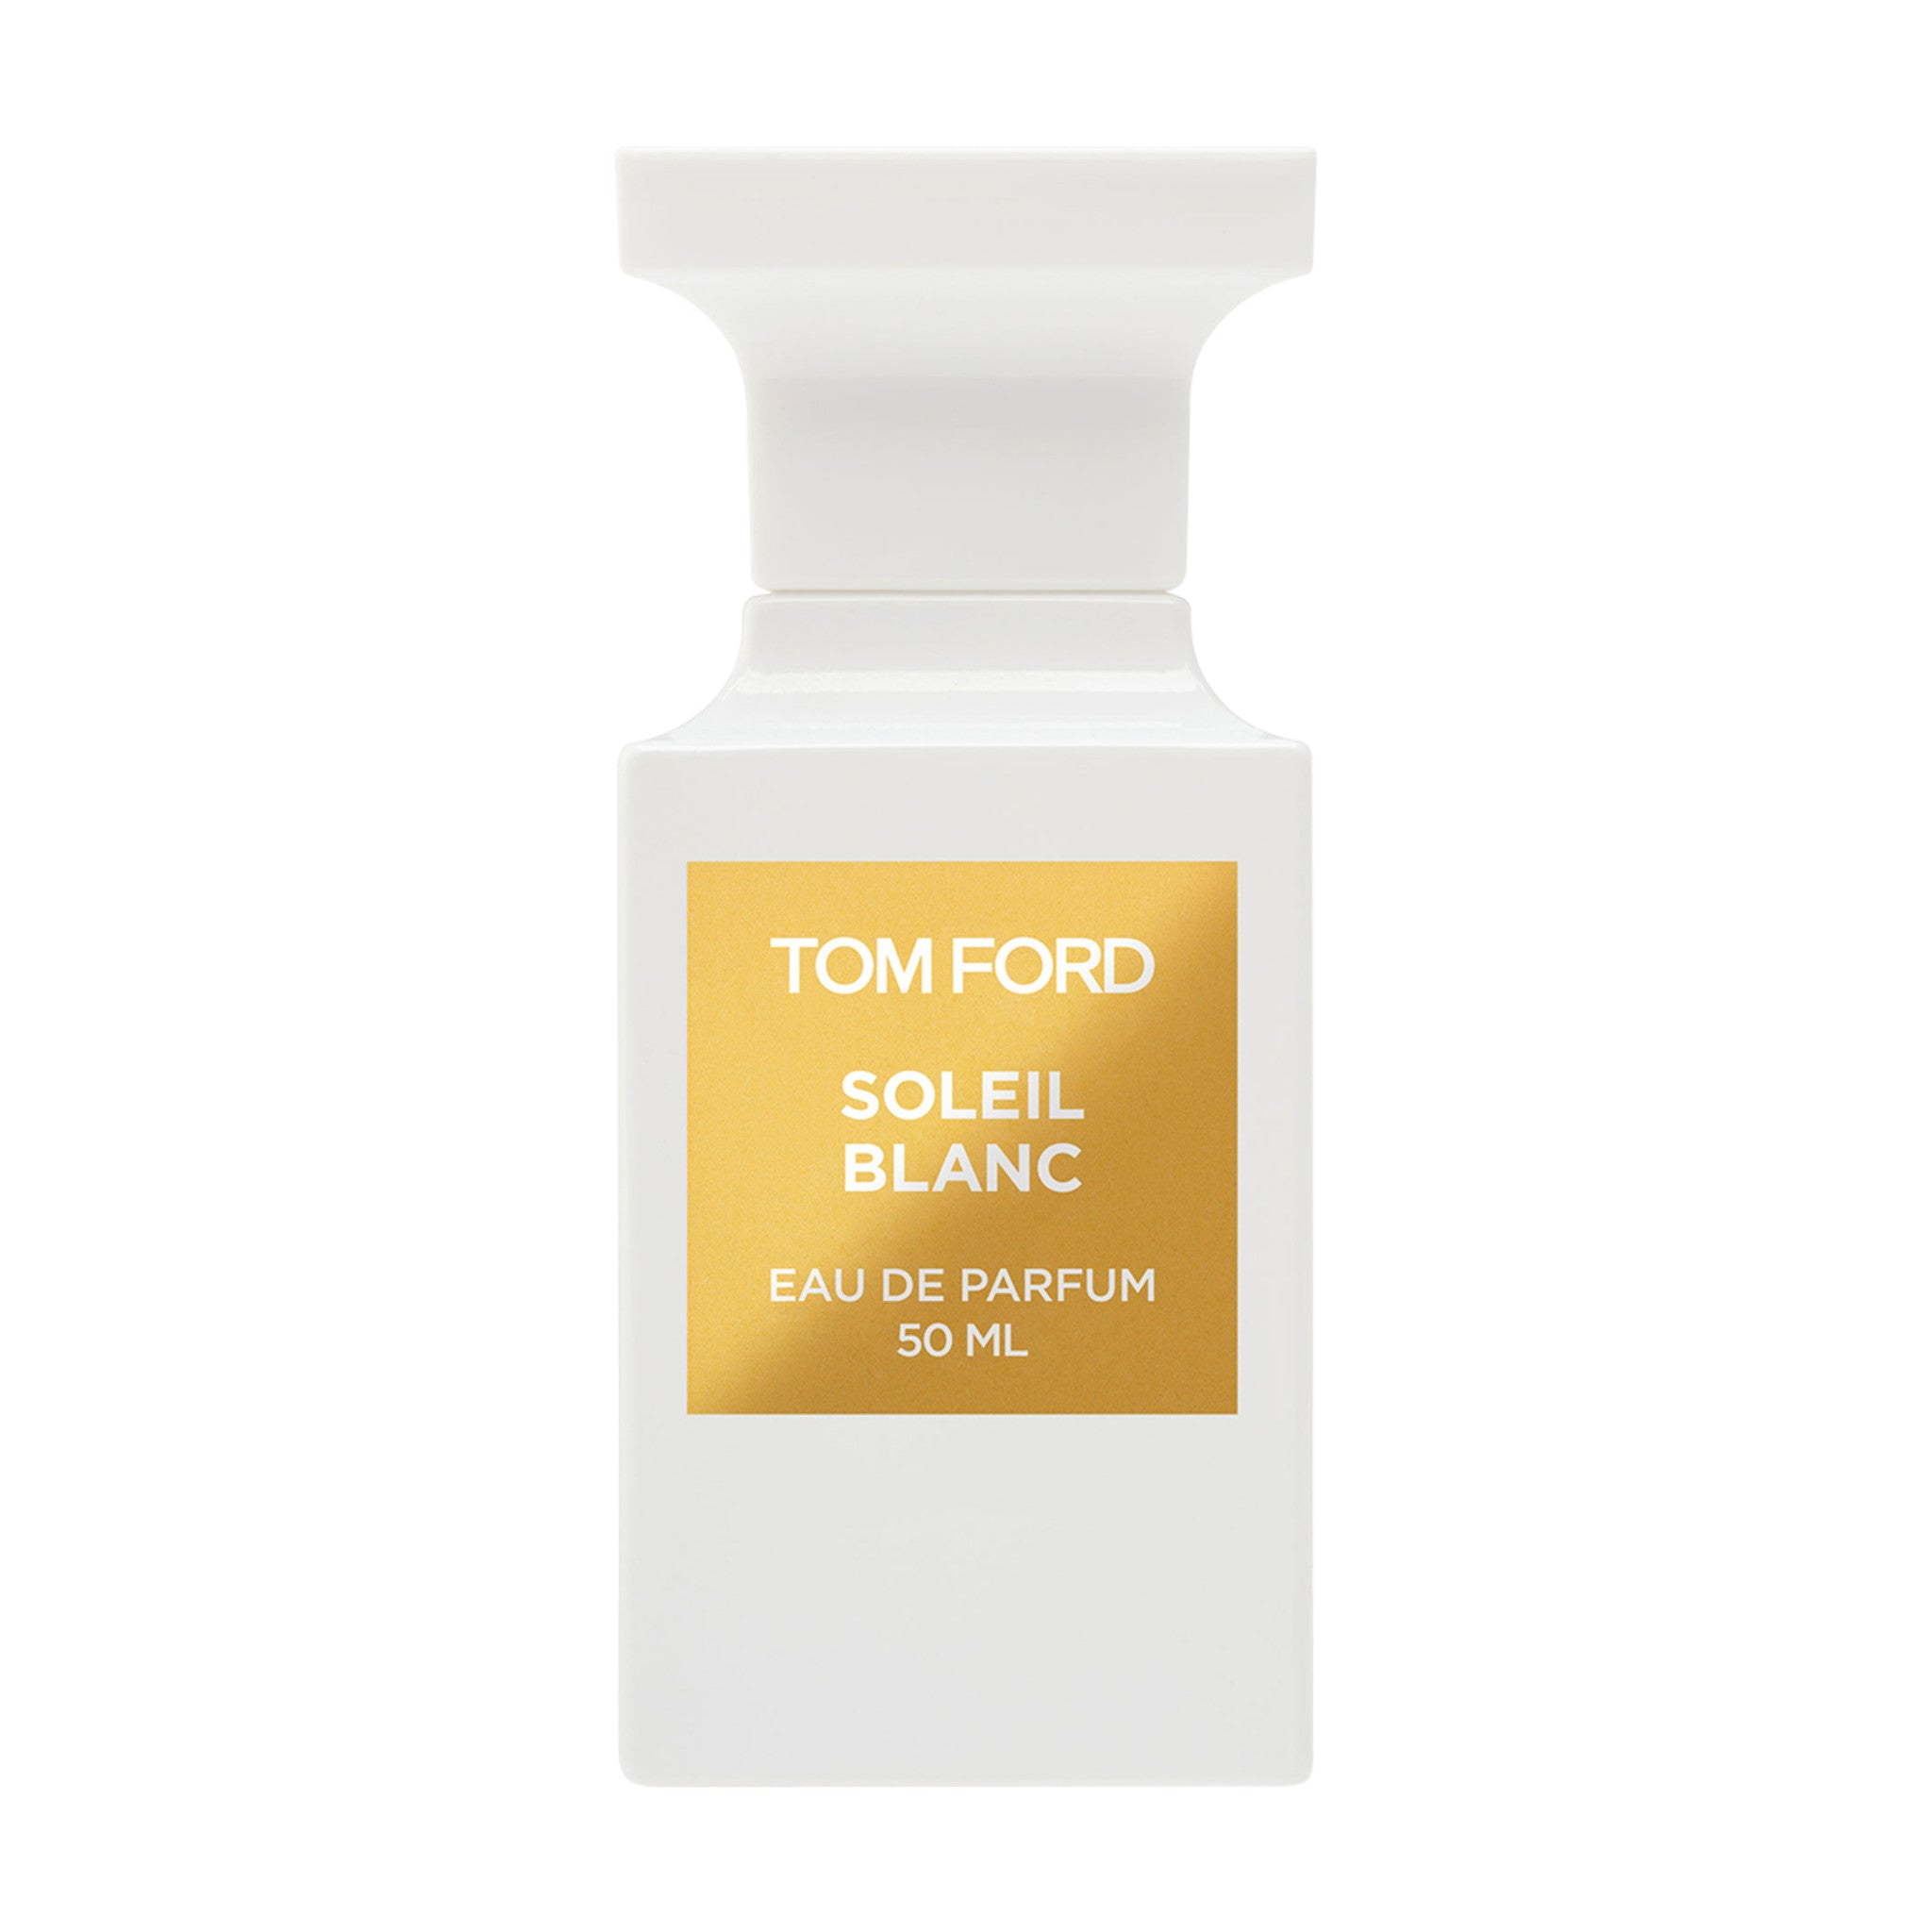 Tom Ford Soleil Blanc Eau de Parfum Spray Size variant: 50 ml main image.